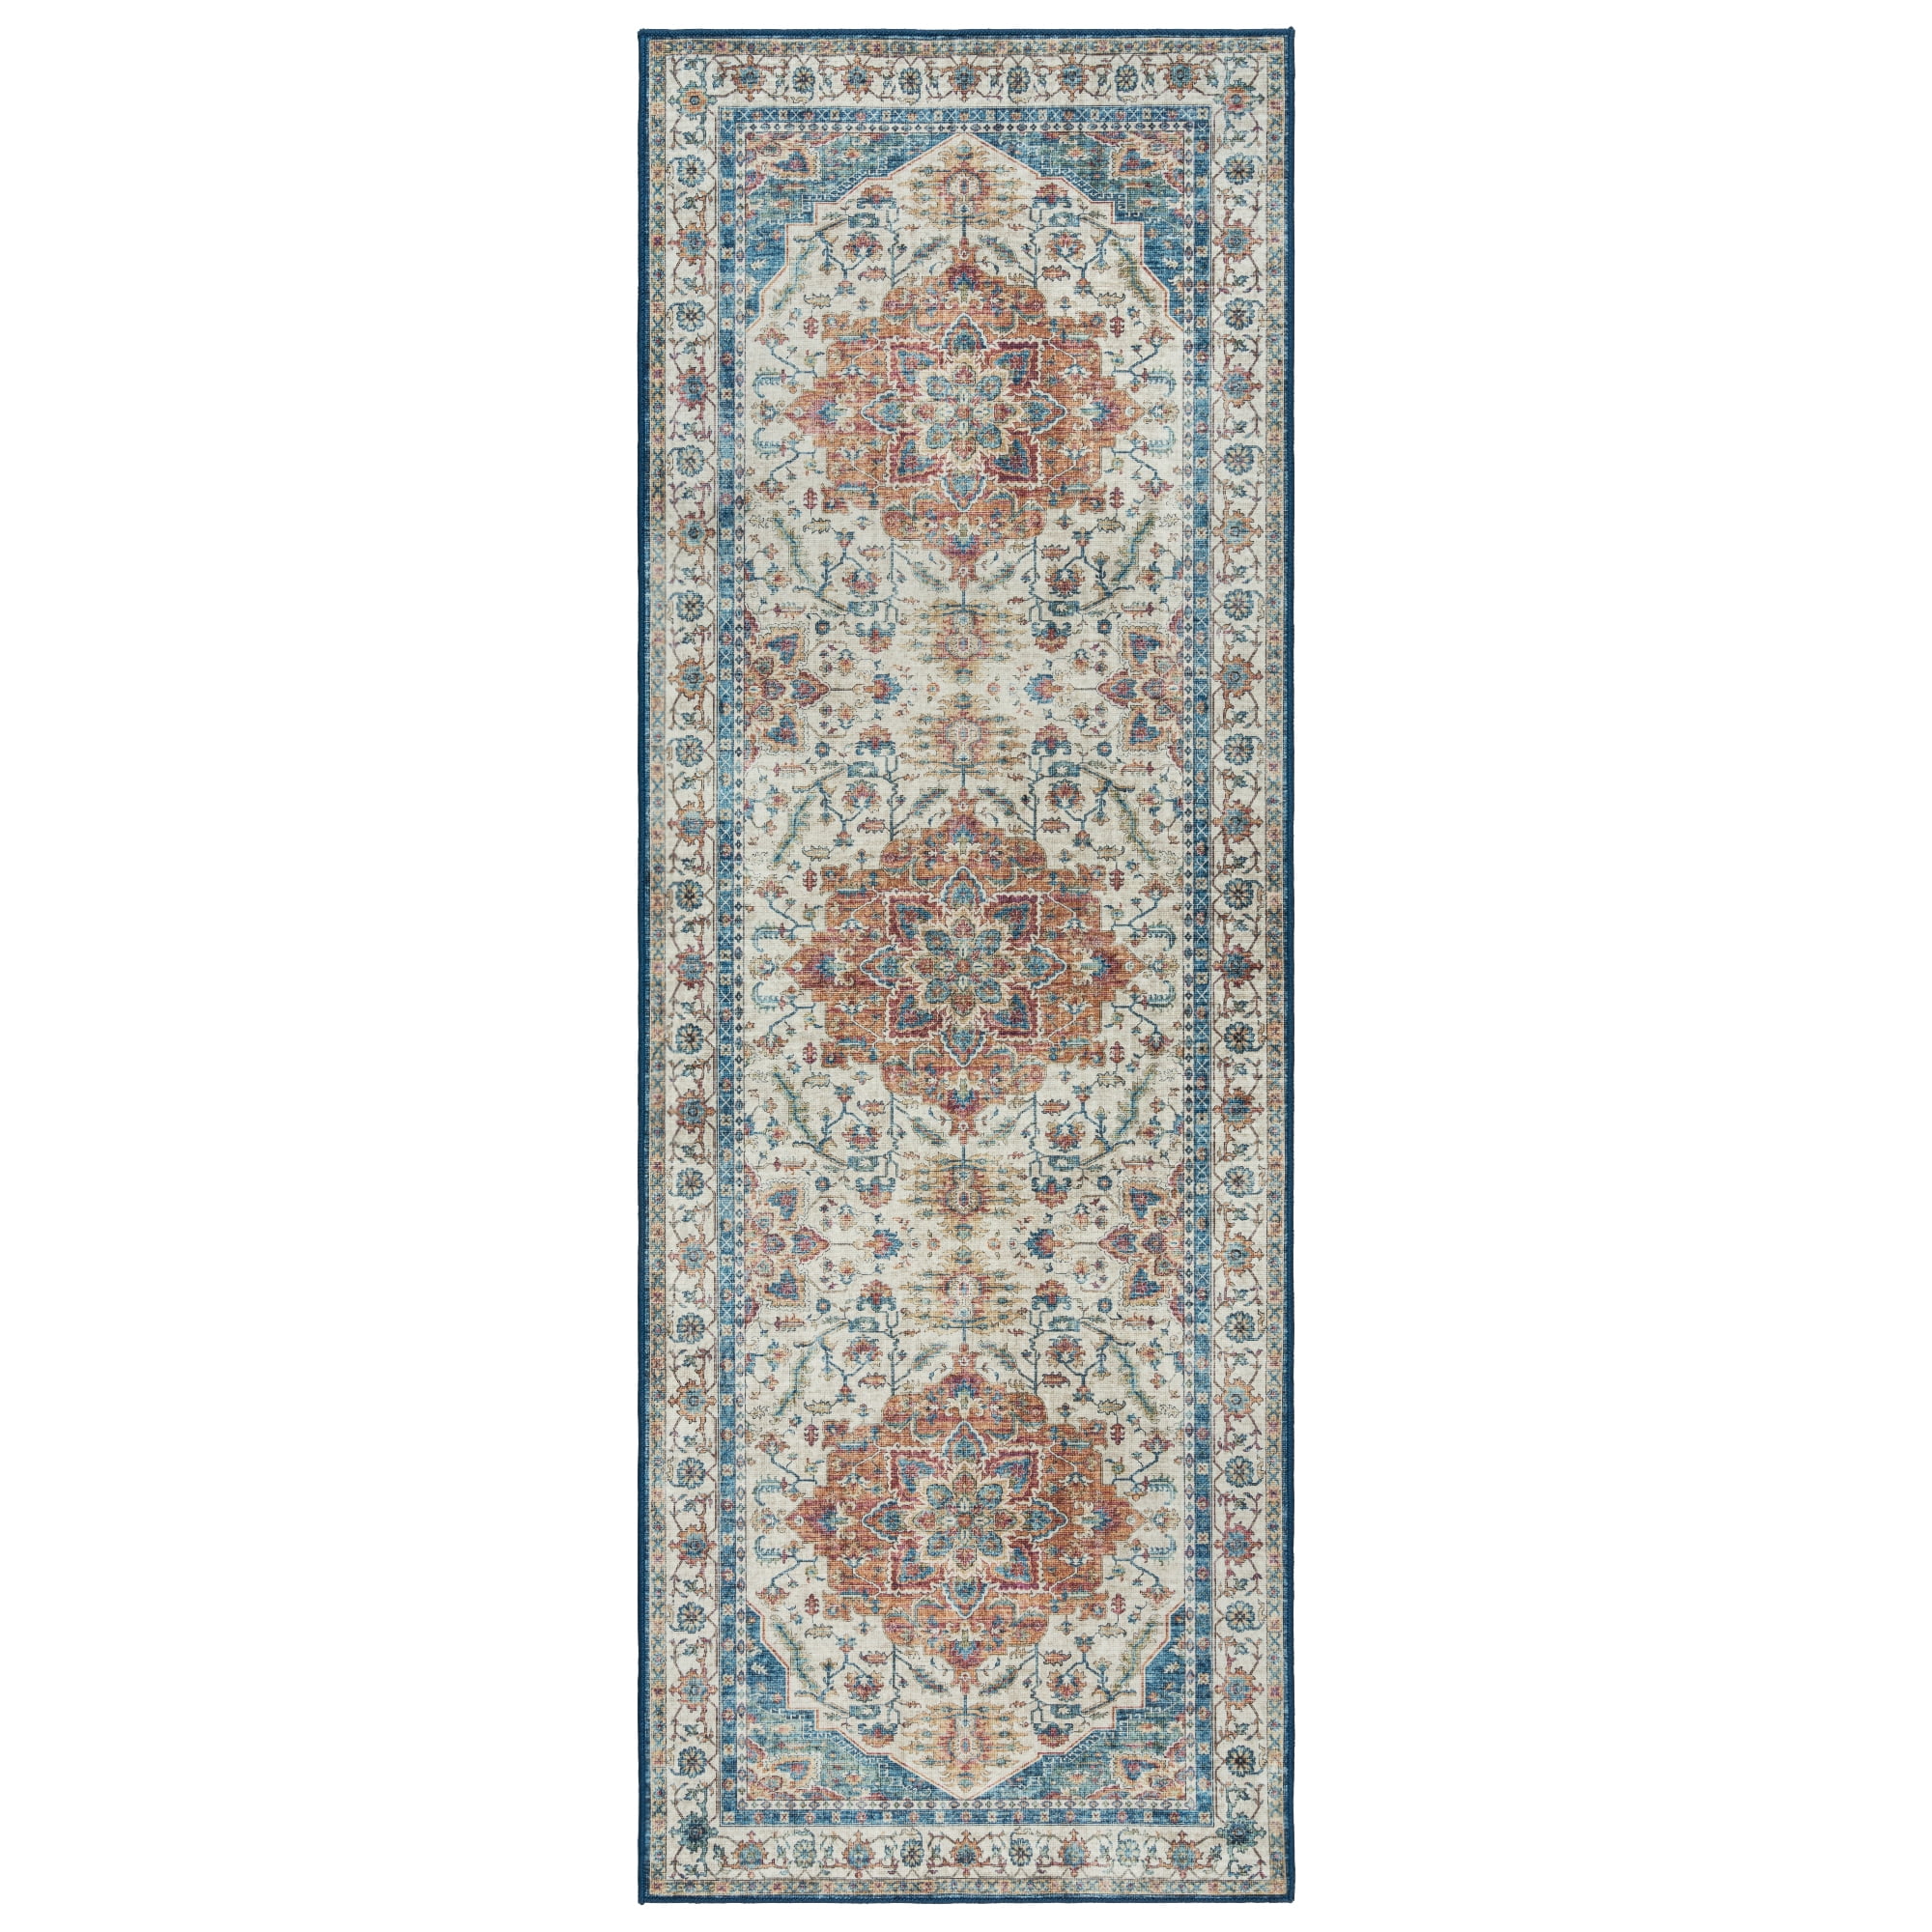 Gertmenian Crystal Print Soha Traditional Moroccan Blue Area Non-Slip Washable Rug, 2x6 Runner